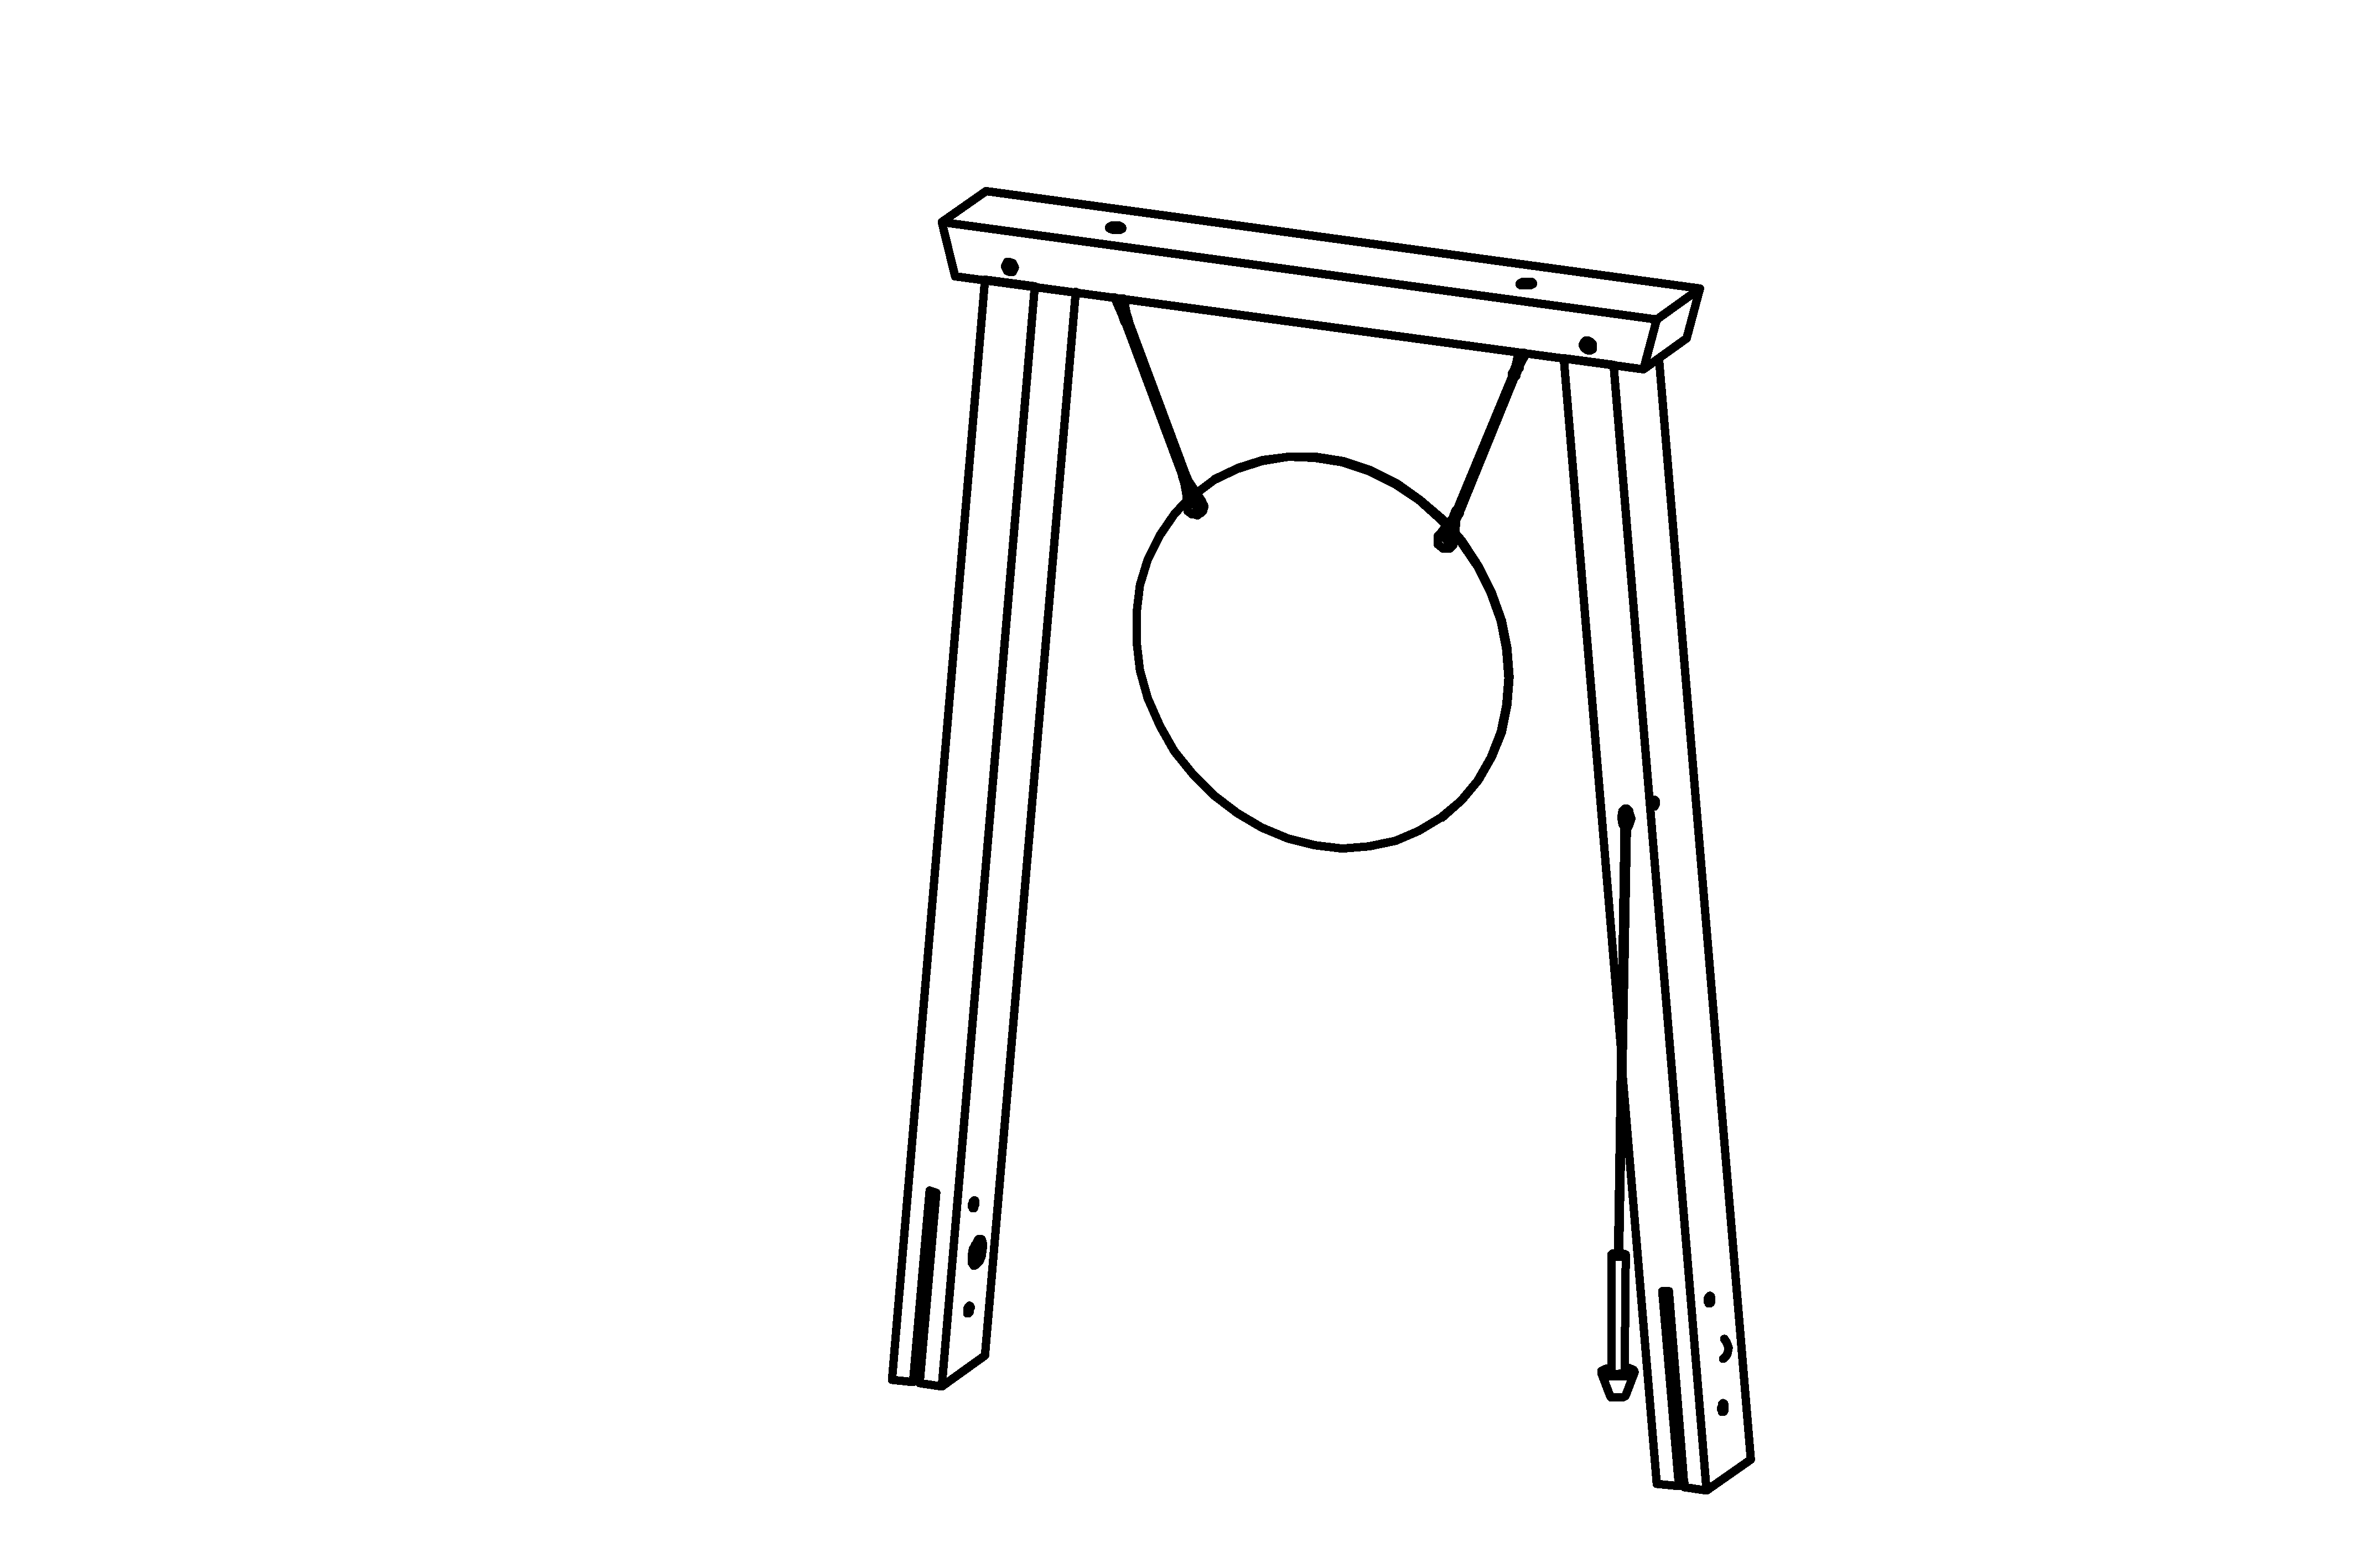 Gong, diameter = 60 cm